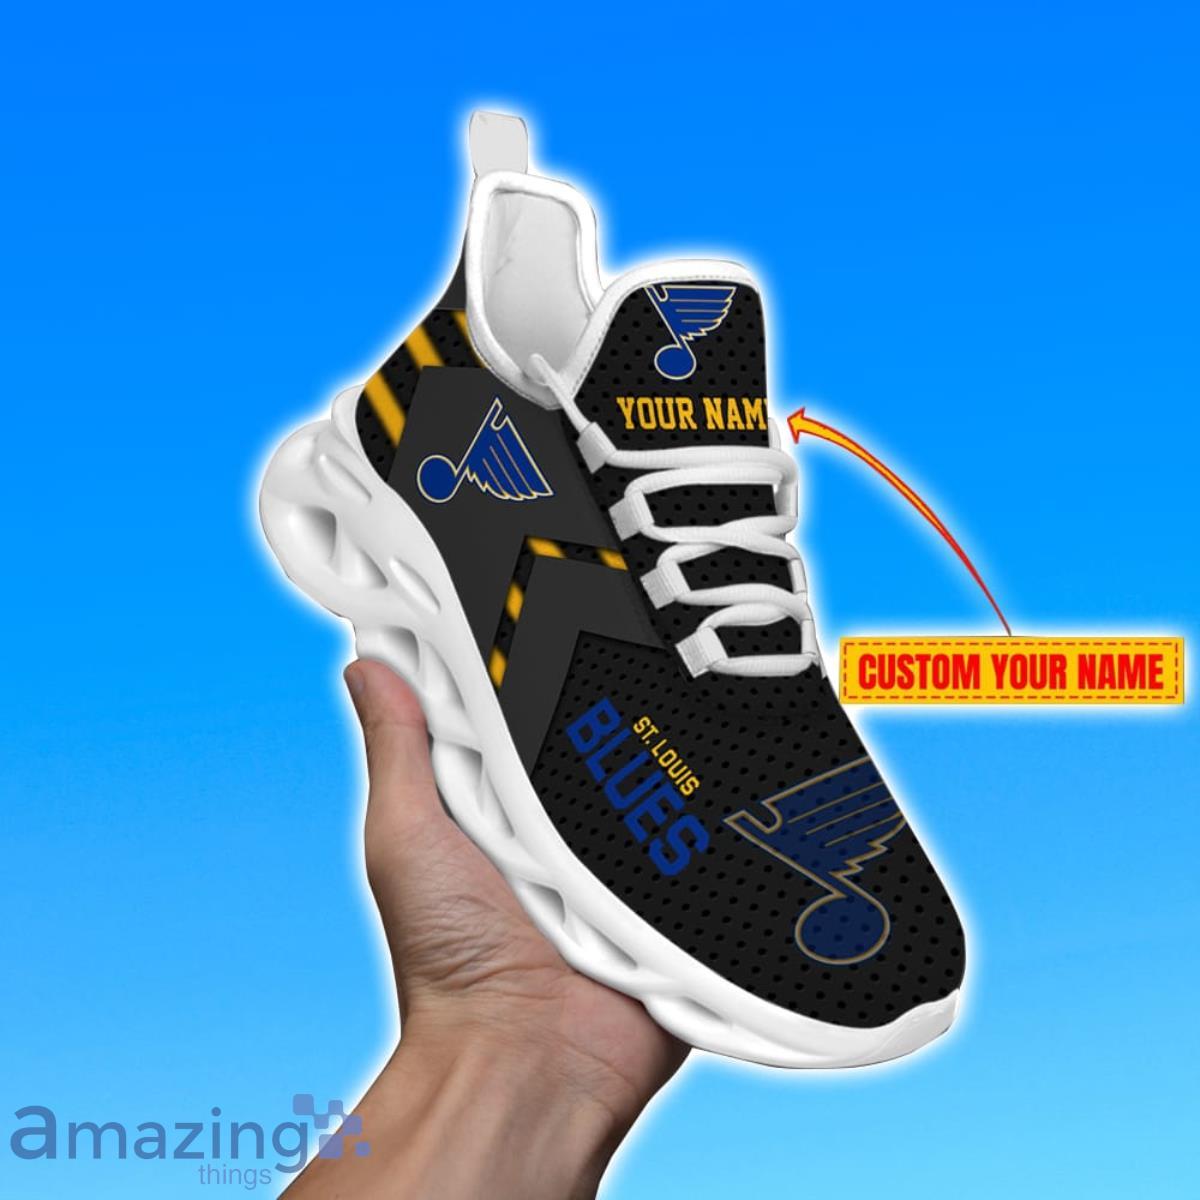 St. Louis Blues Custom Name Air Jordan 4 Shoes Impressive Gift For Men Women